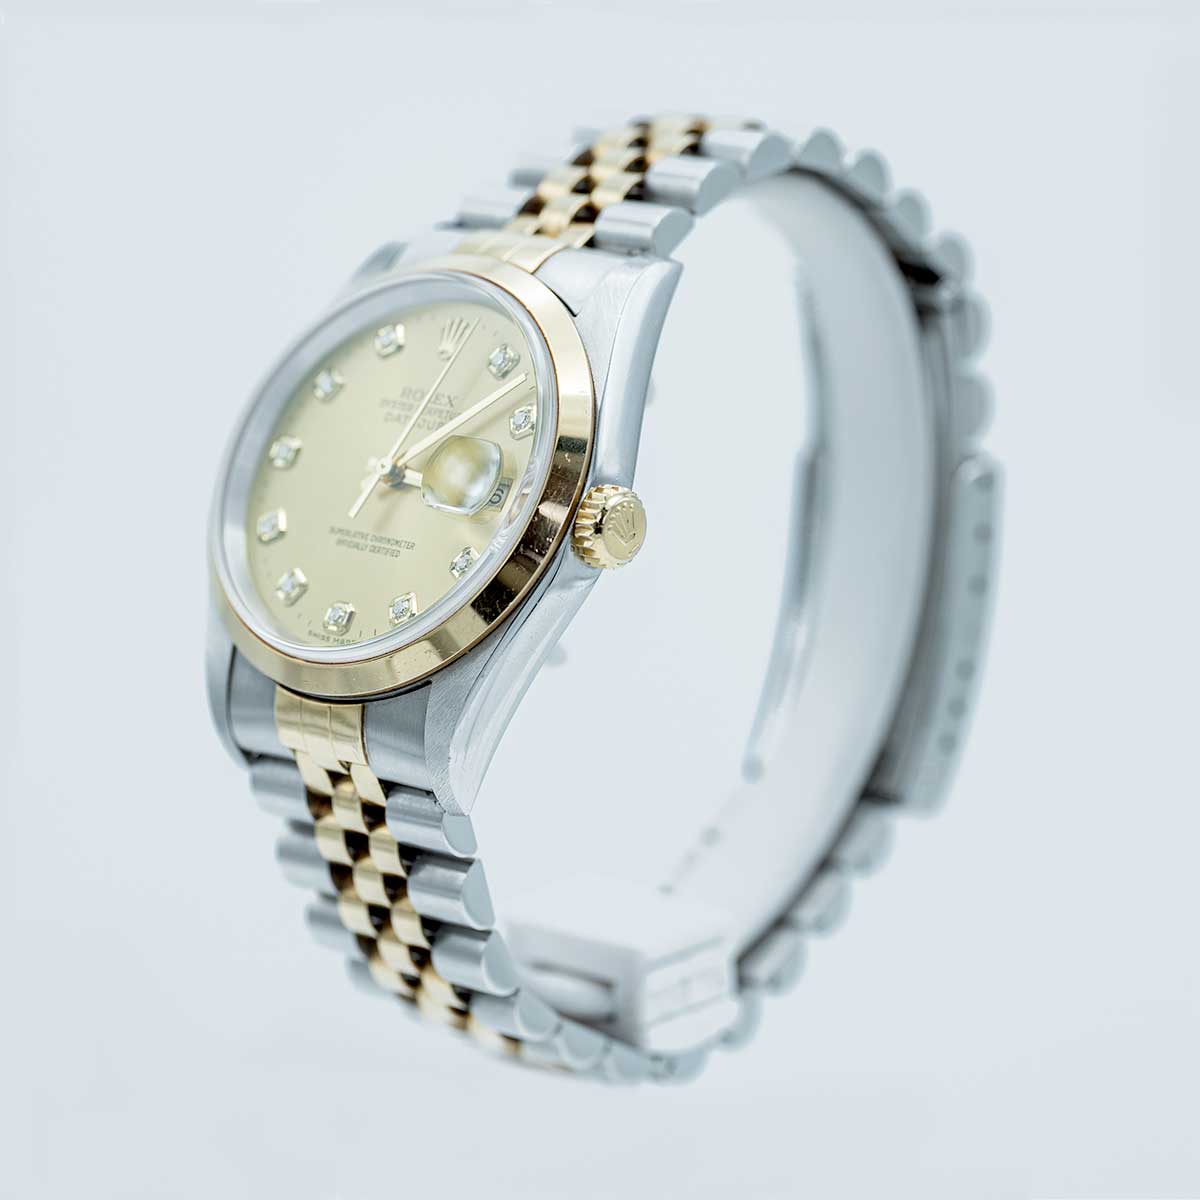 Luxury watches 5